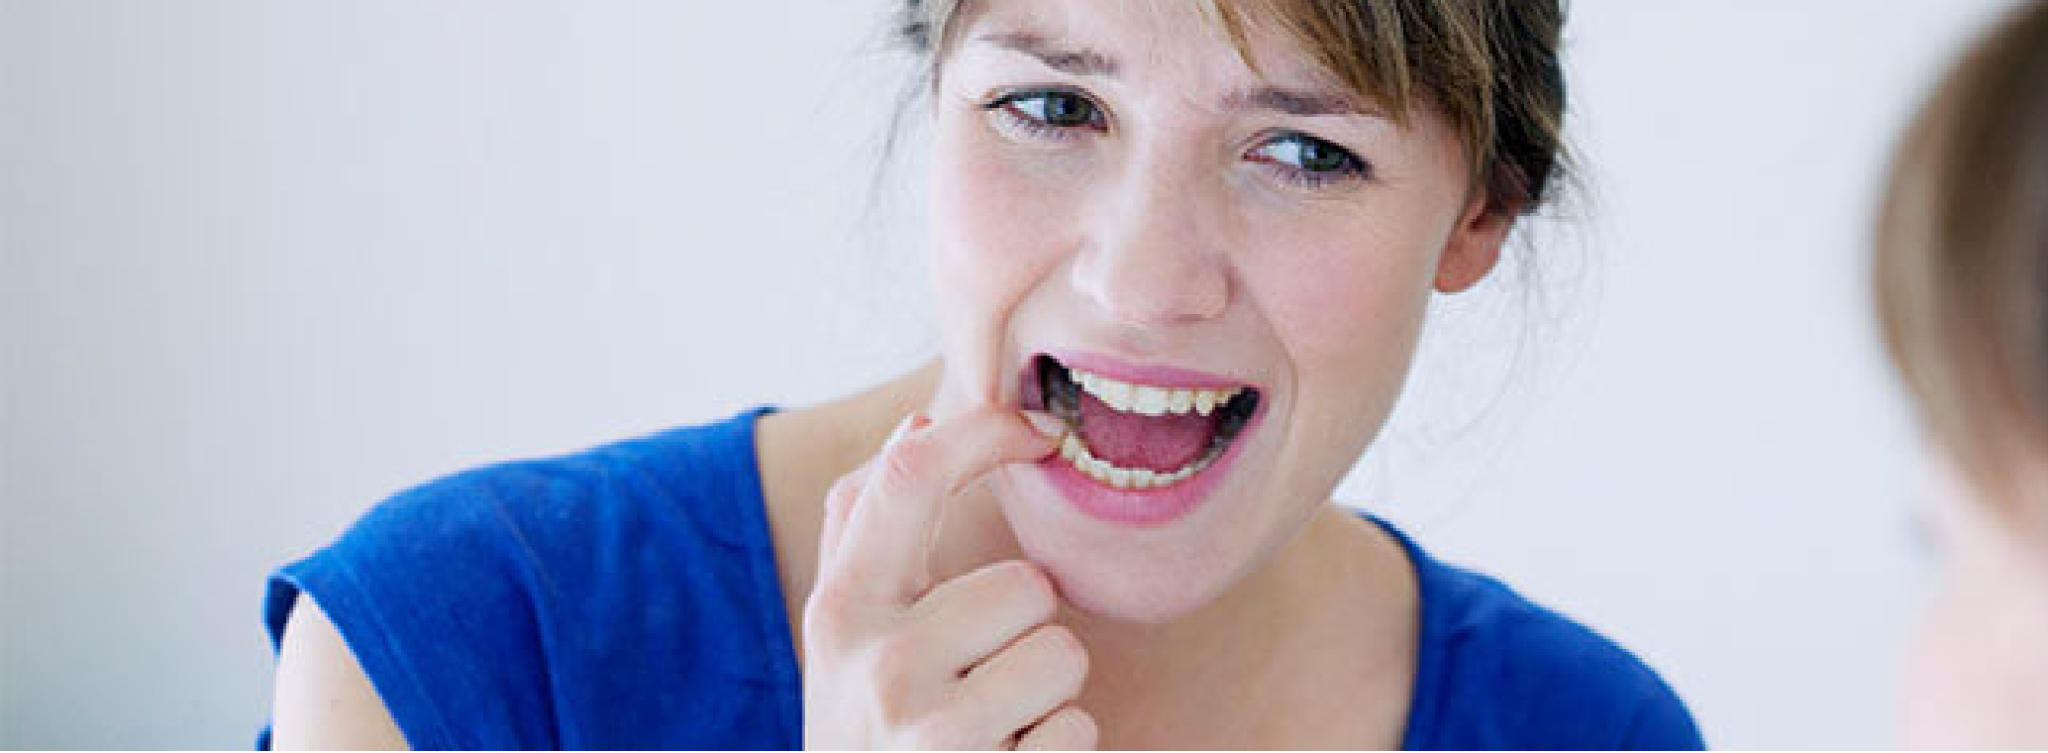 2 Sensitive Teeth Causes, Treatments, Prevention@2x